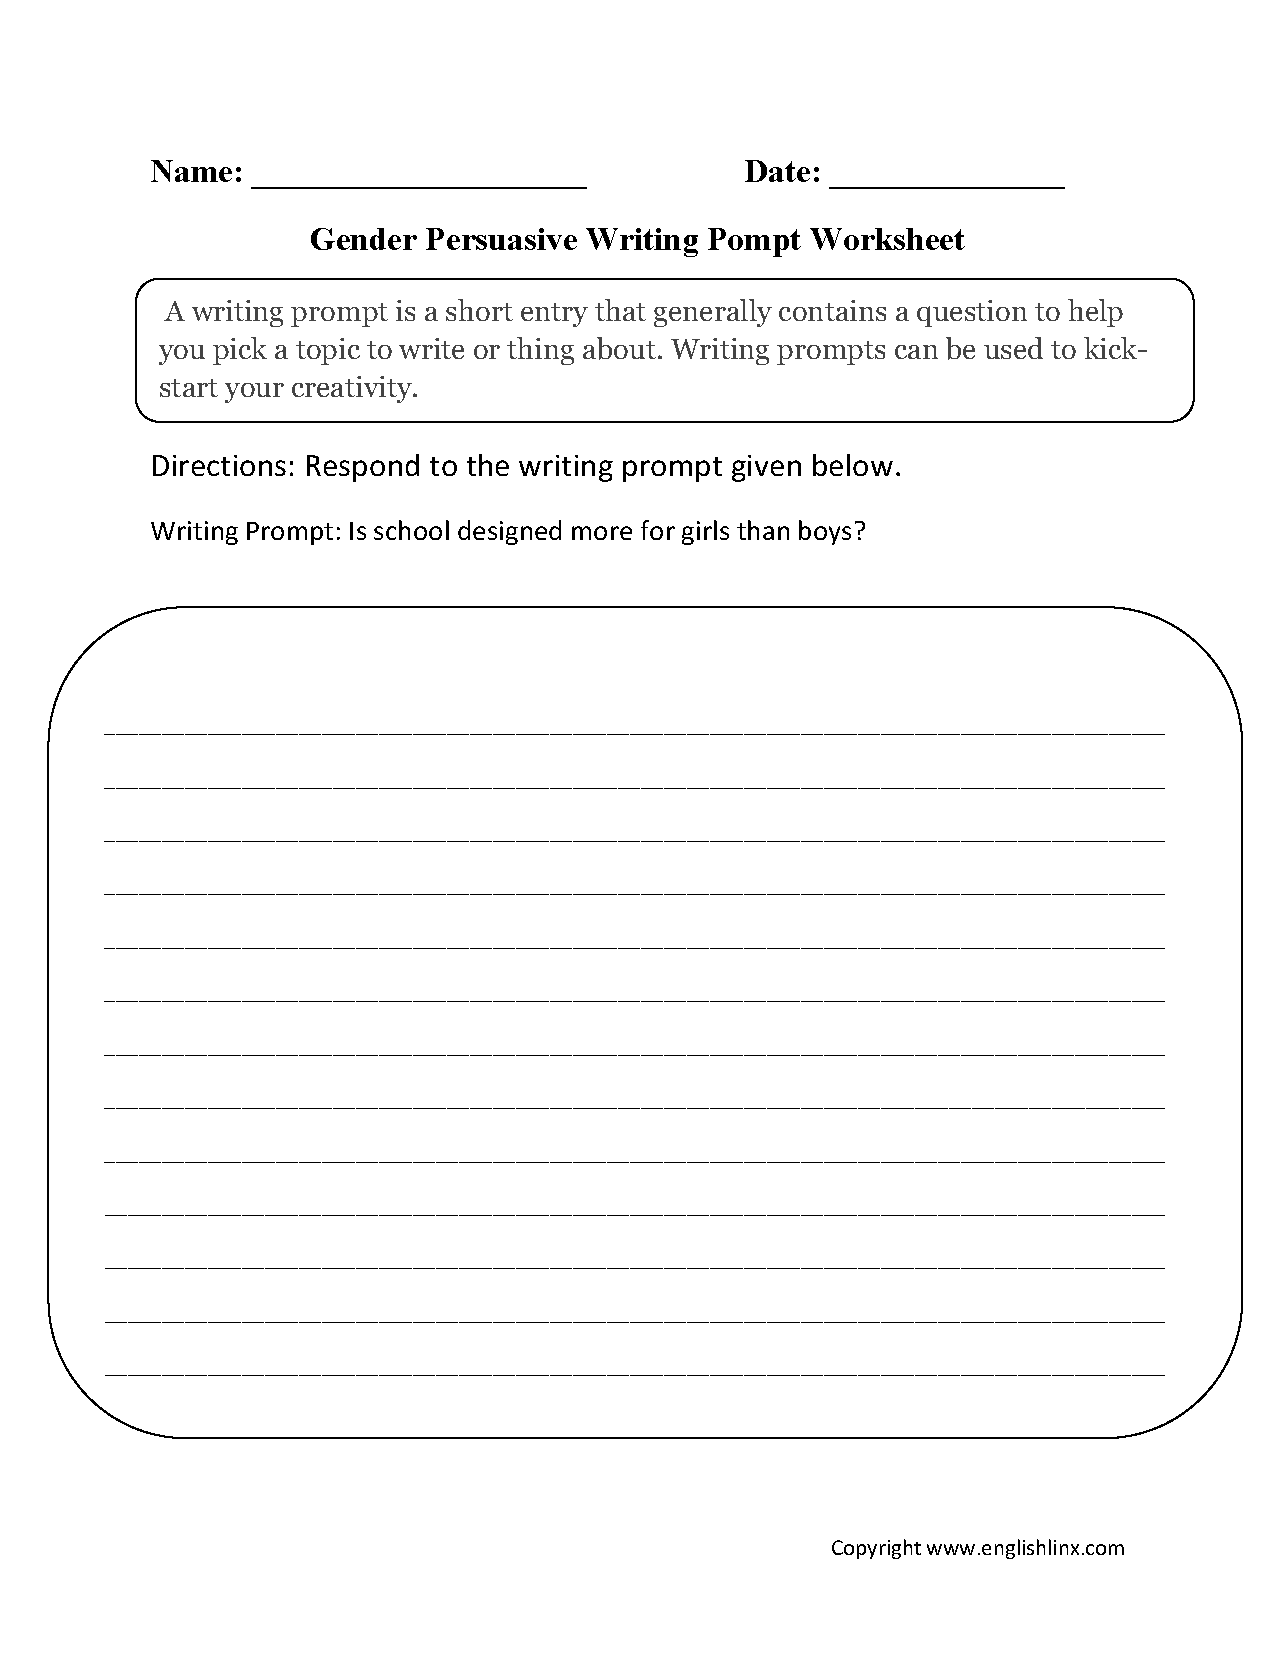 Gender Persuasive Writing Prompt Worksheets